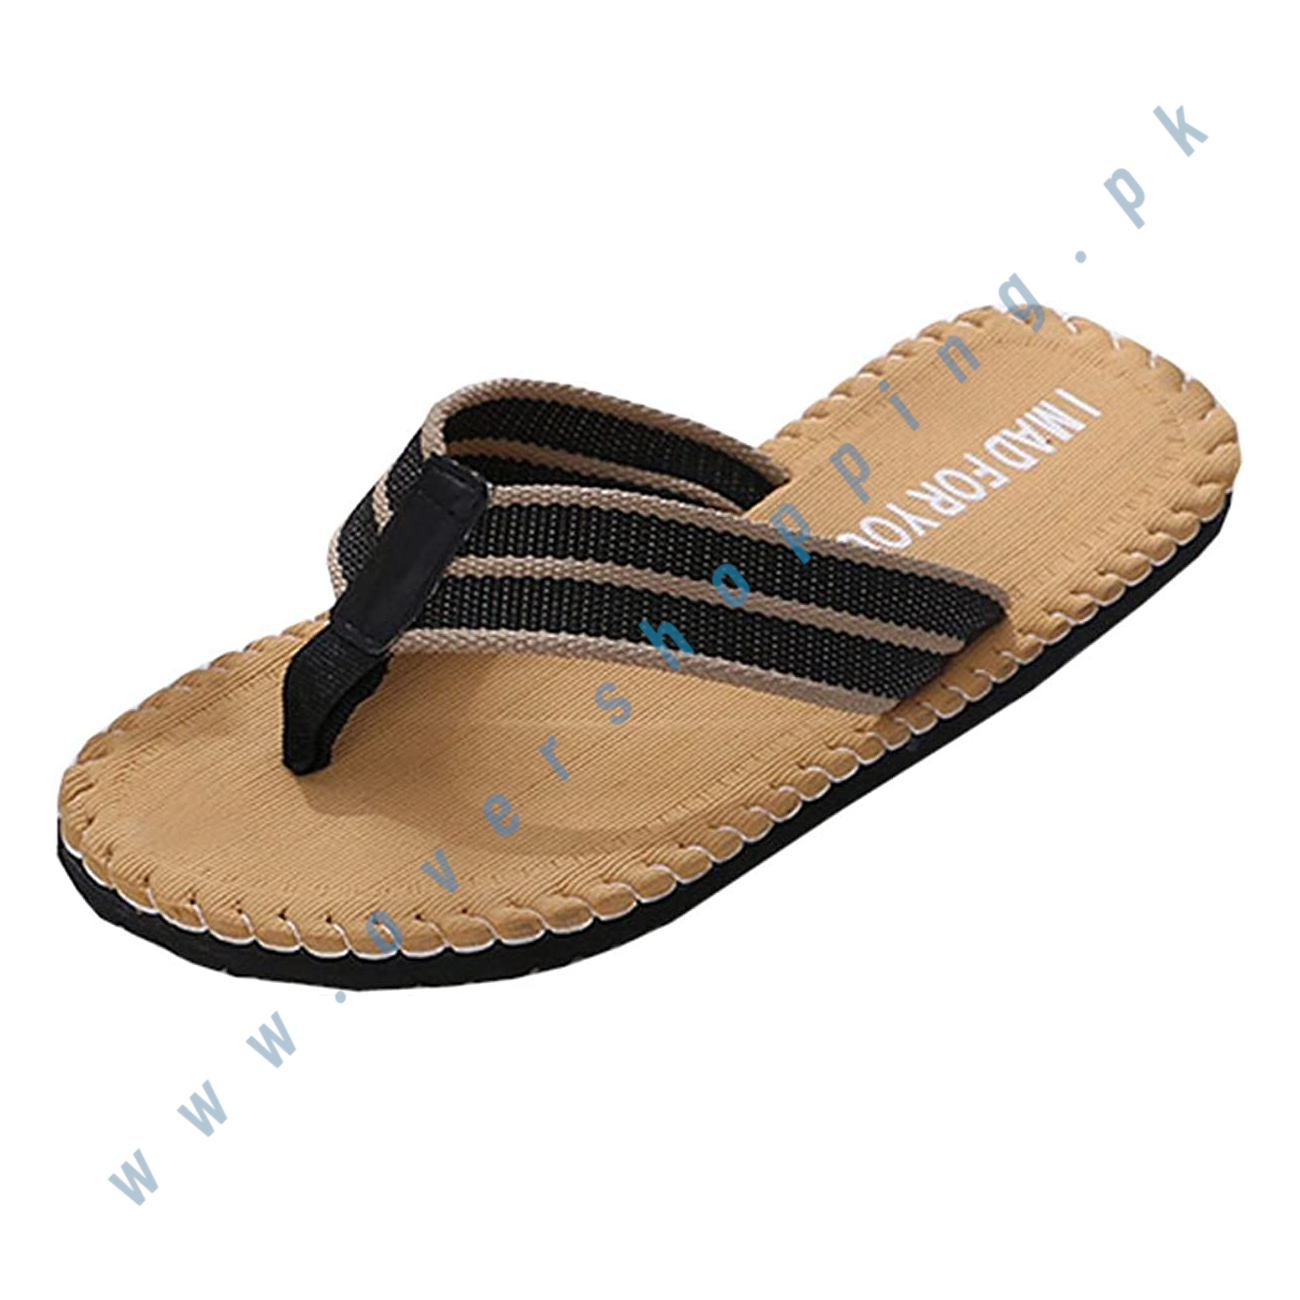 Eipogp Flip Flops - Mens Outdoor Sport Beach Sandals with Arch Support